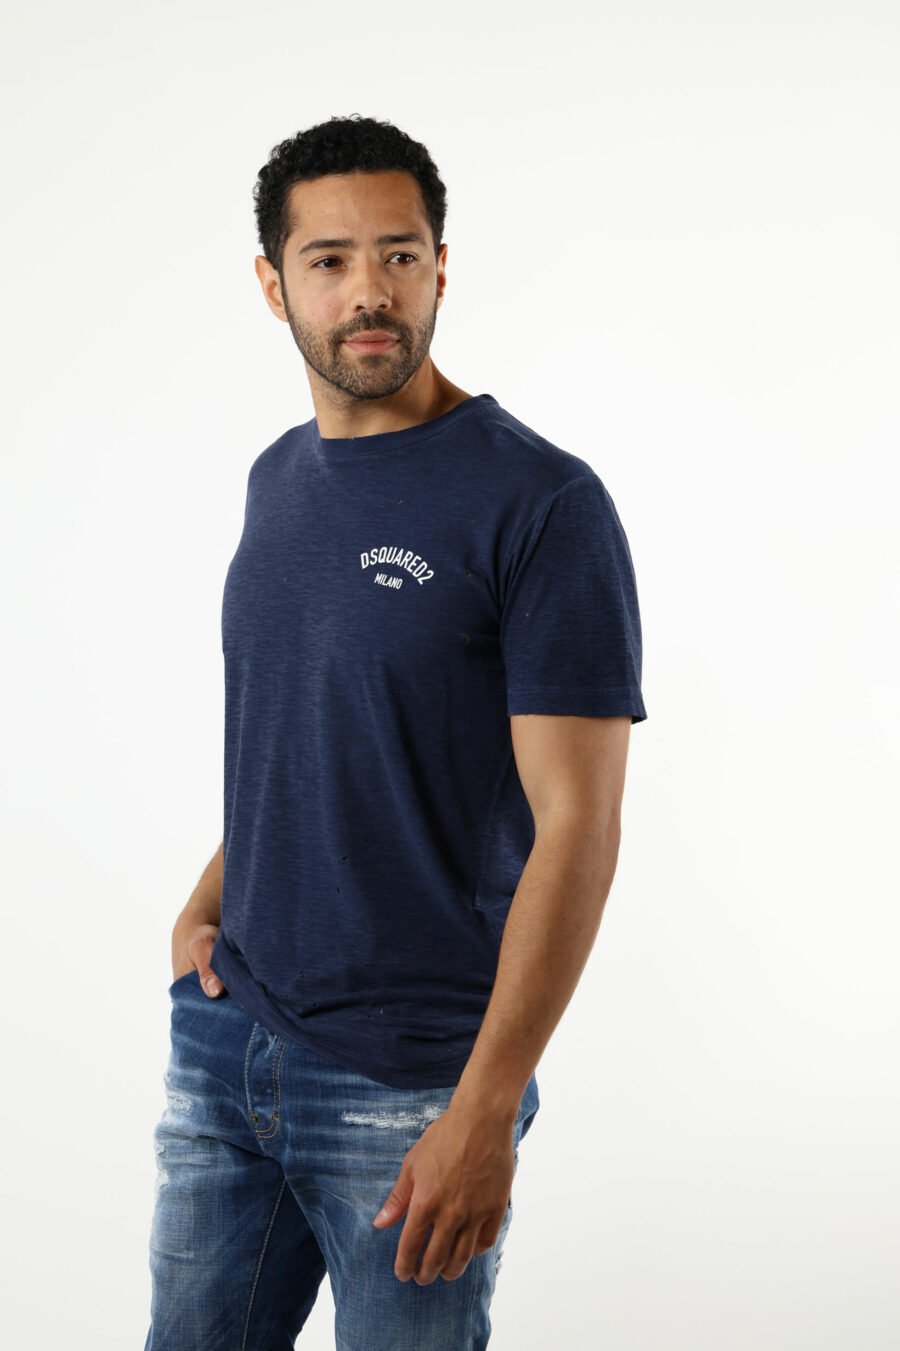 Dunkelblaues T-Shirt mit Mini-Logo "milano" - 111193